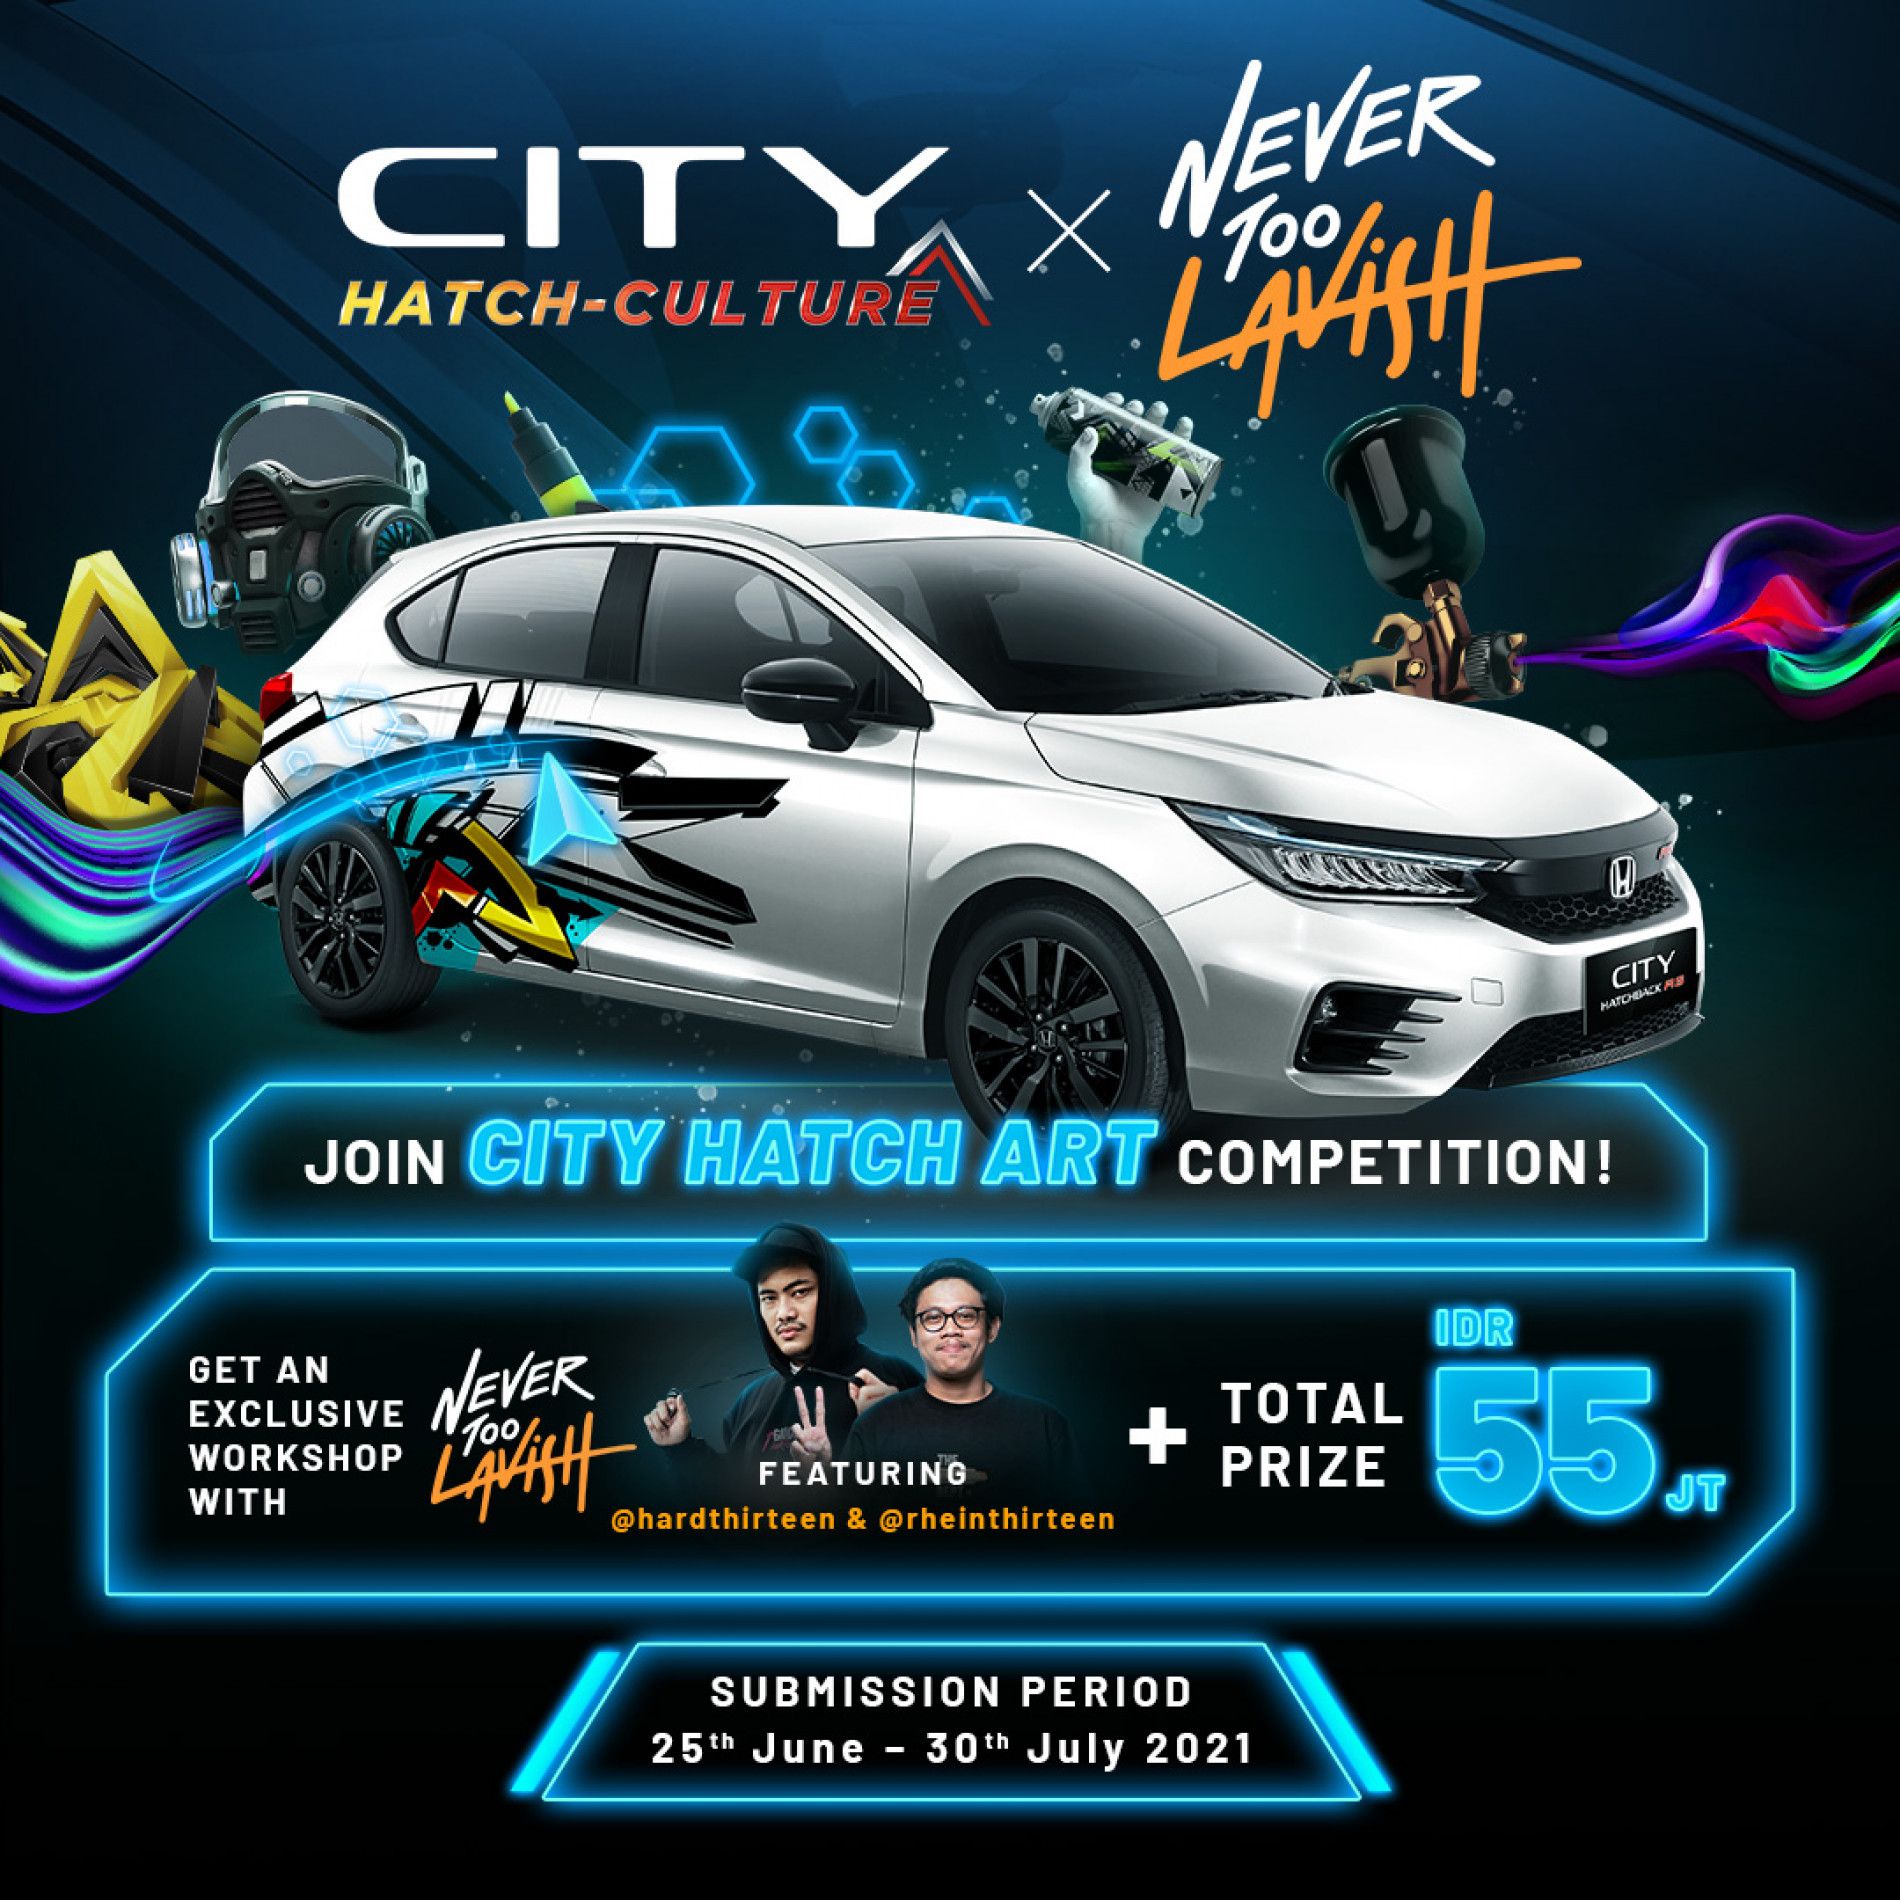 Bersama NeverTooLavish, Honda Gelar Kompetisi Desain "City Hatch Art"